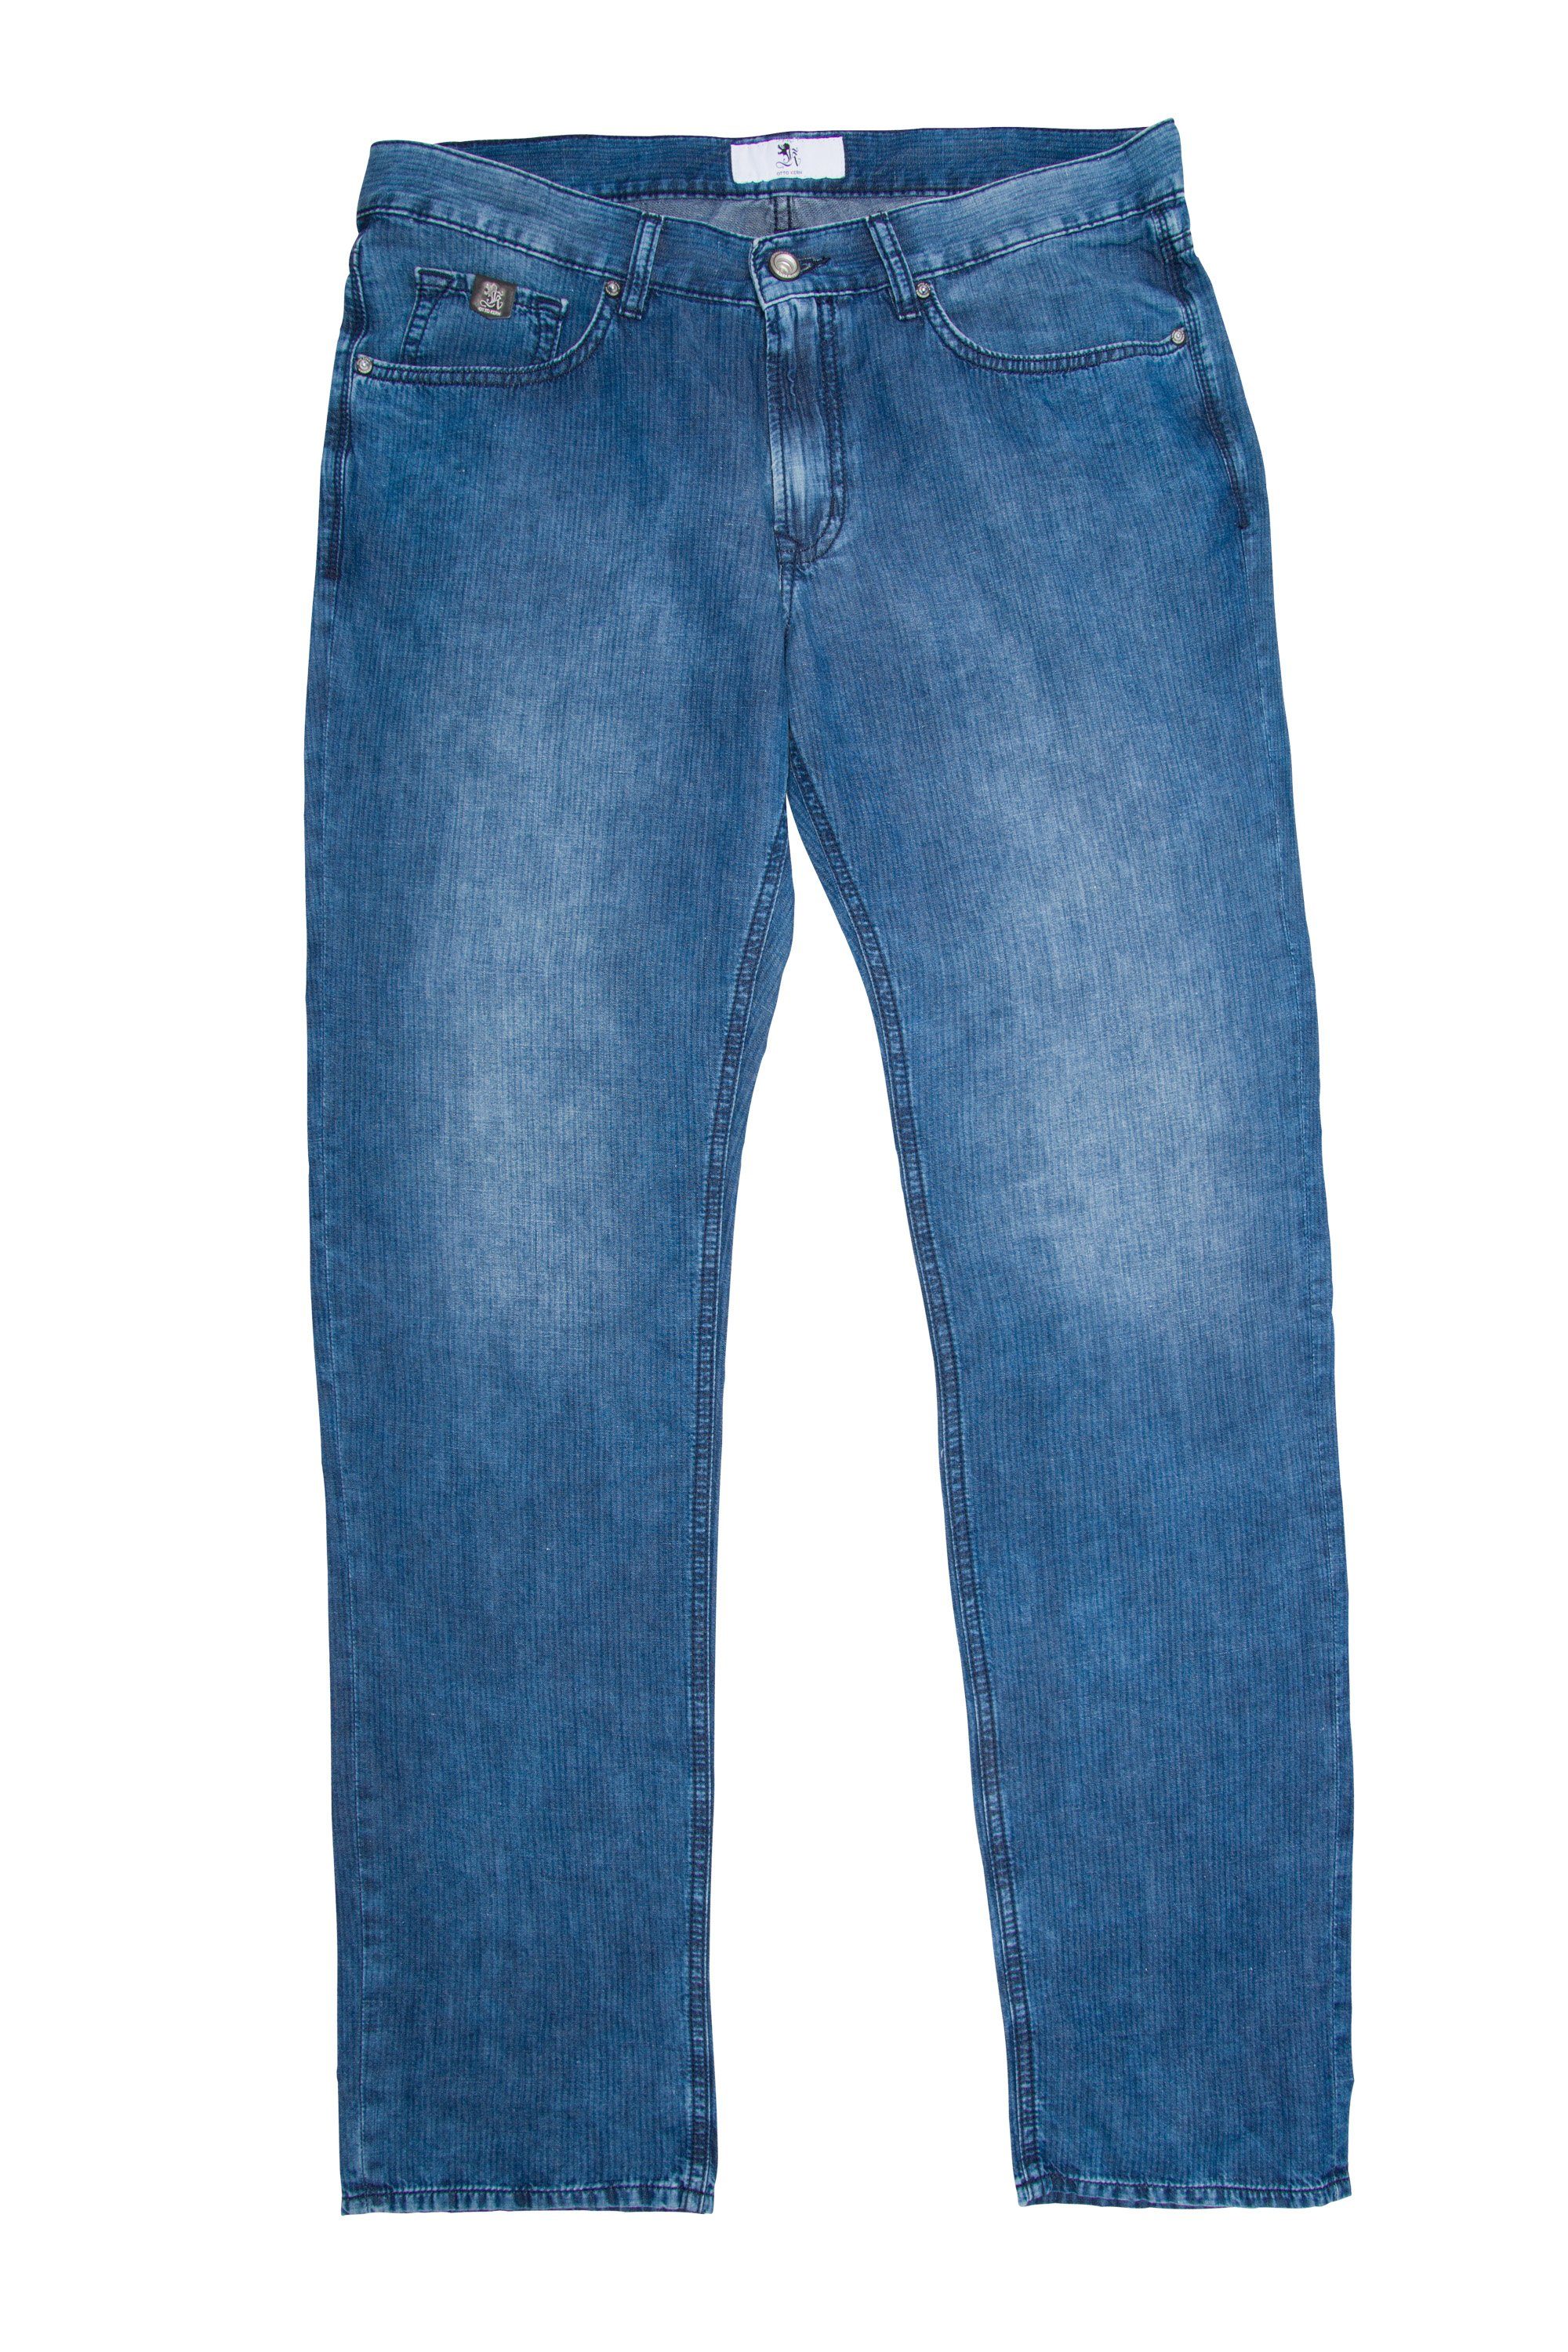 Otto Kern 5-Pocket-Jeans OTTO KERN OK 01 blue used 67001 6005.6822